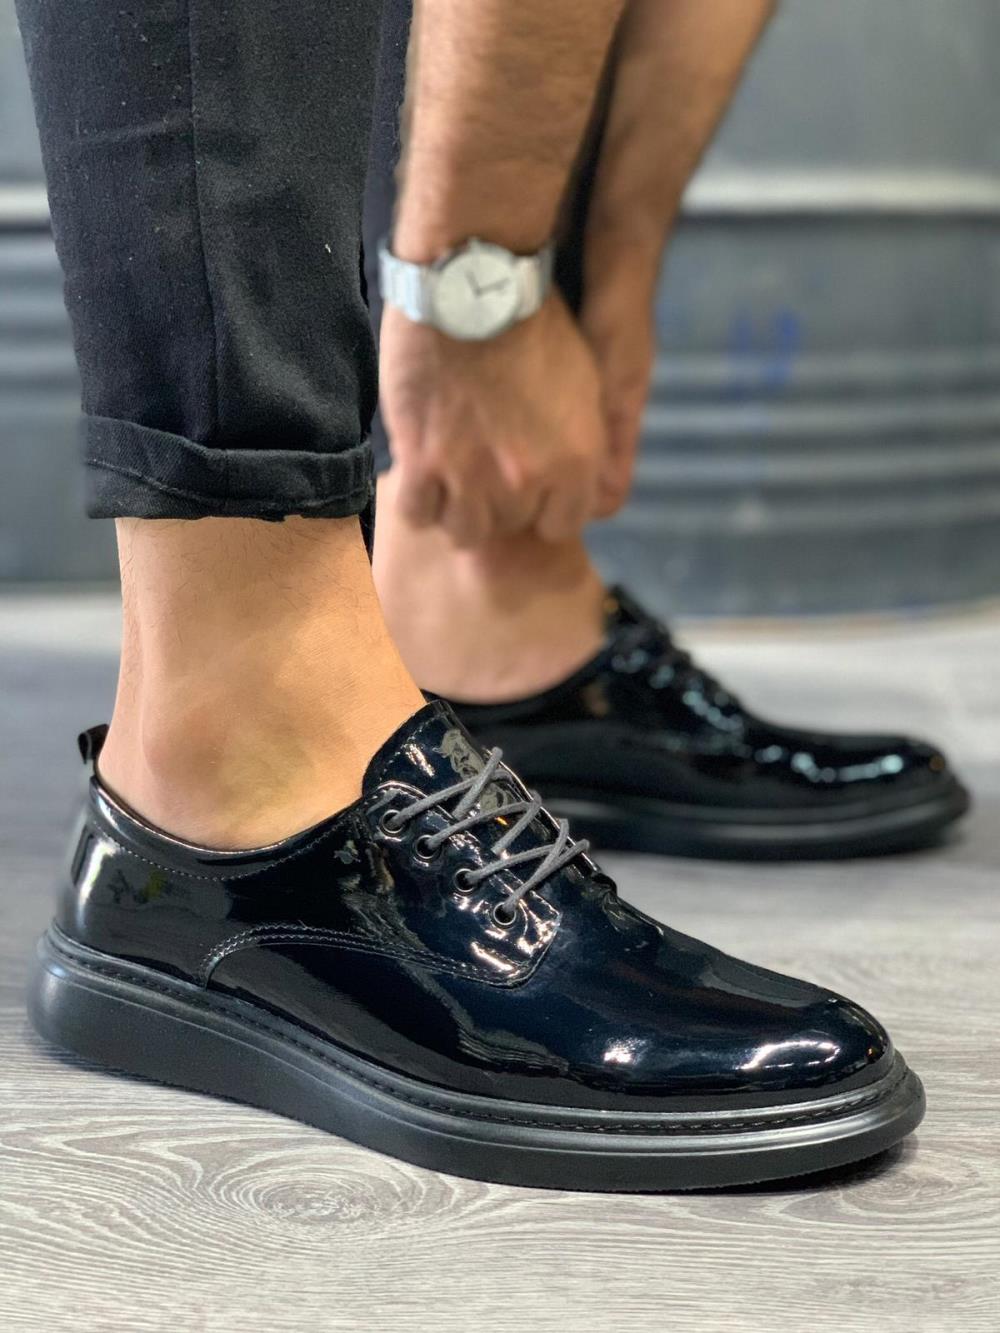 CLZ941  Klasik Erkek Ayakkabı  Siyah Rugan (Siyah Taban)